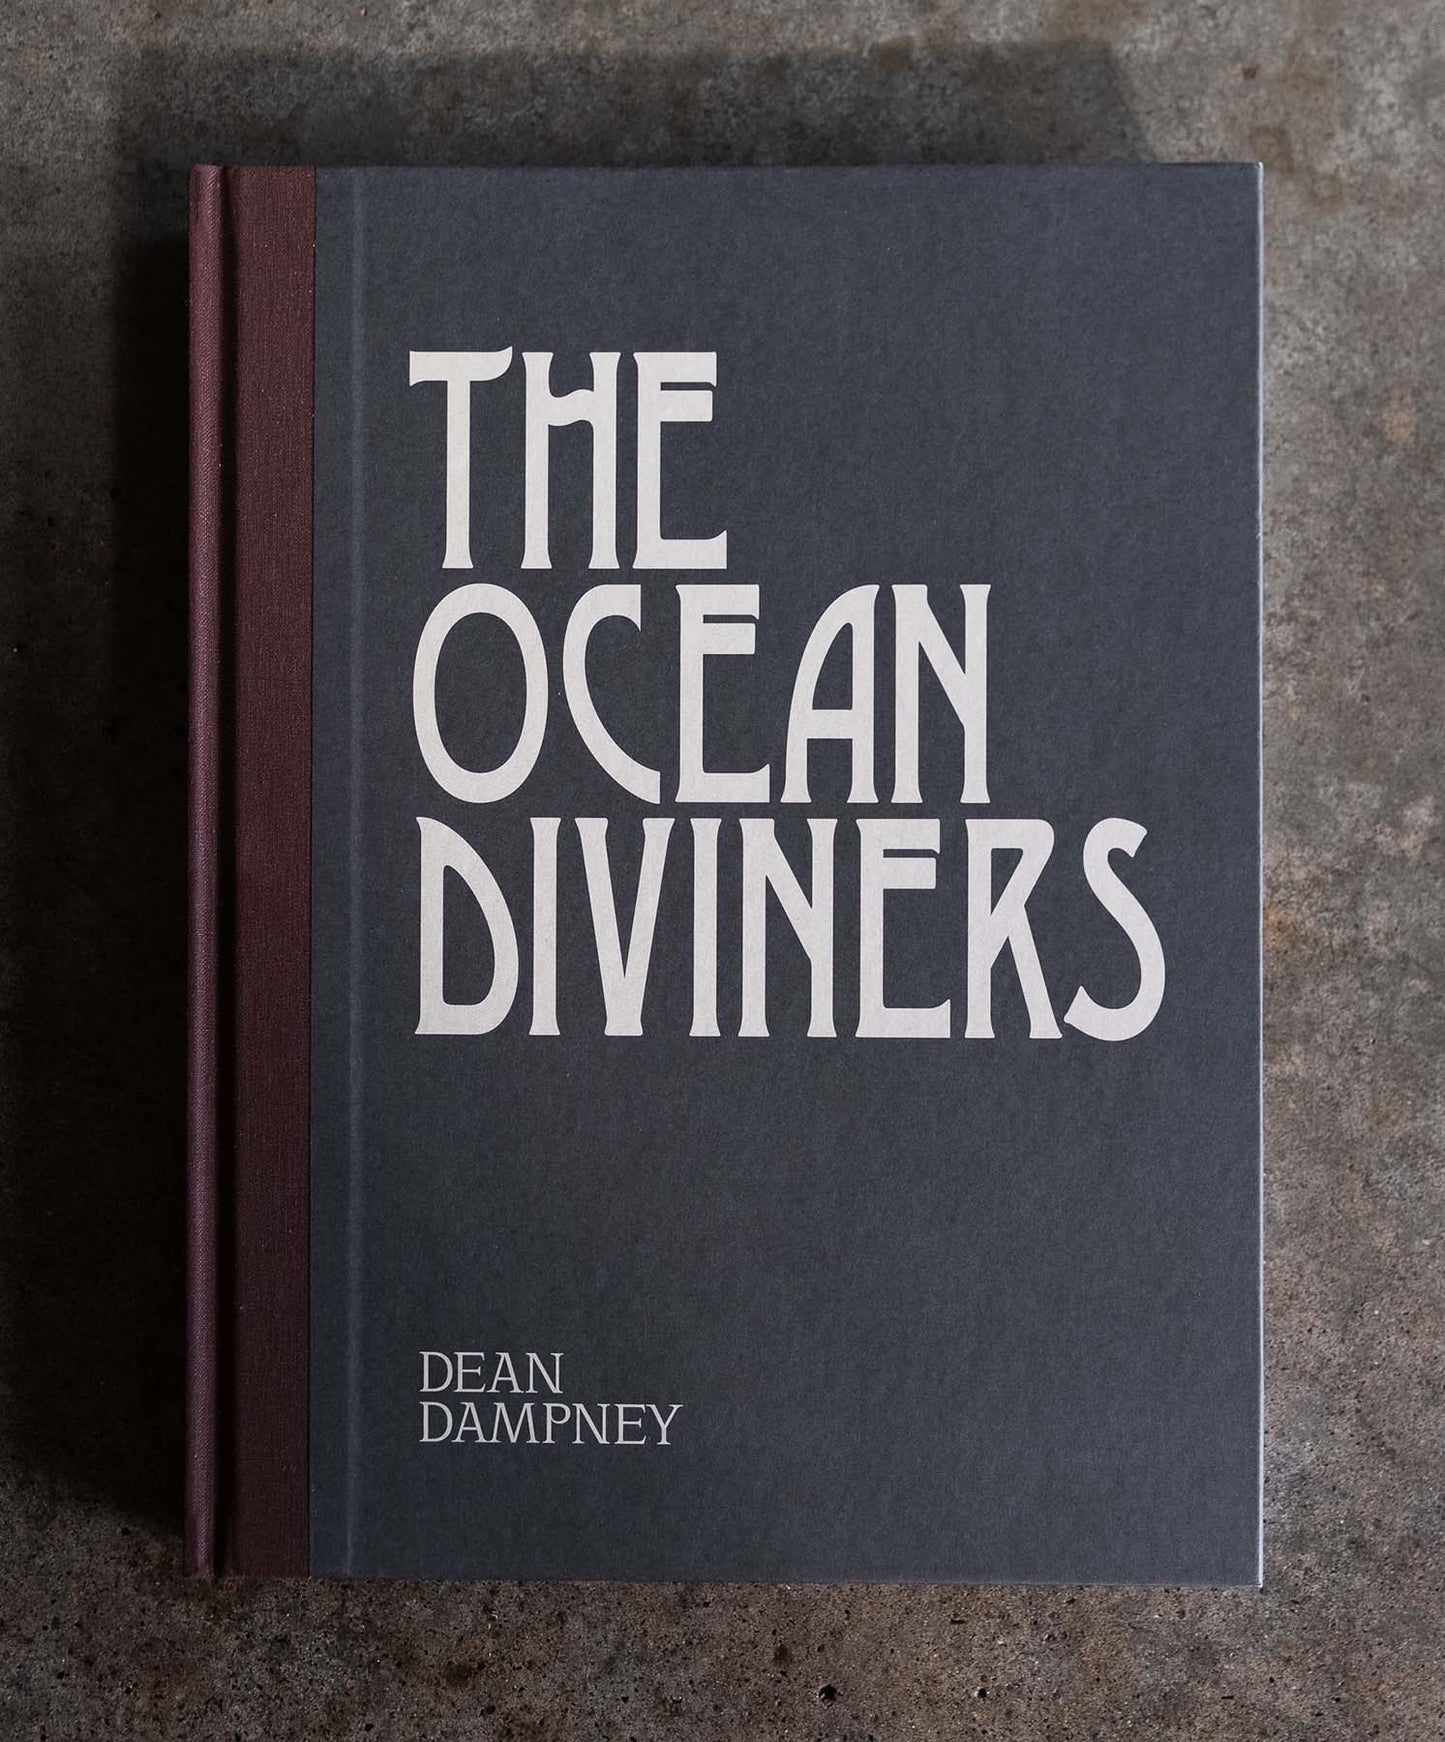 THE OCEAN DIVINERS